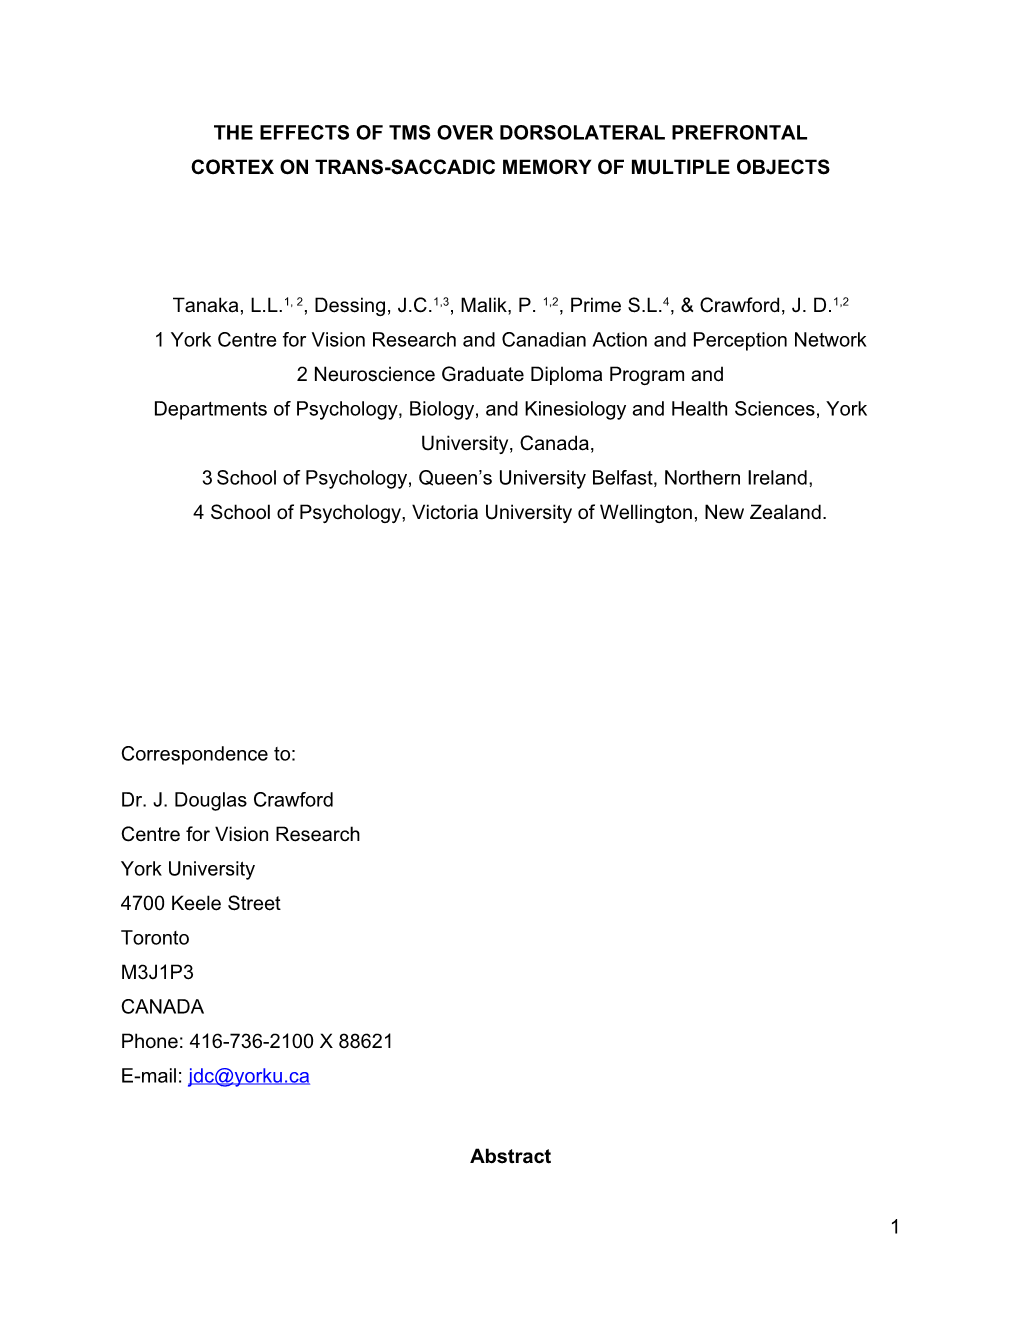 Manuscript: Journal of Cognitive Neuroscience